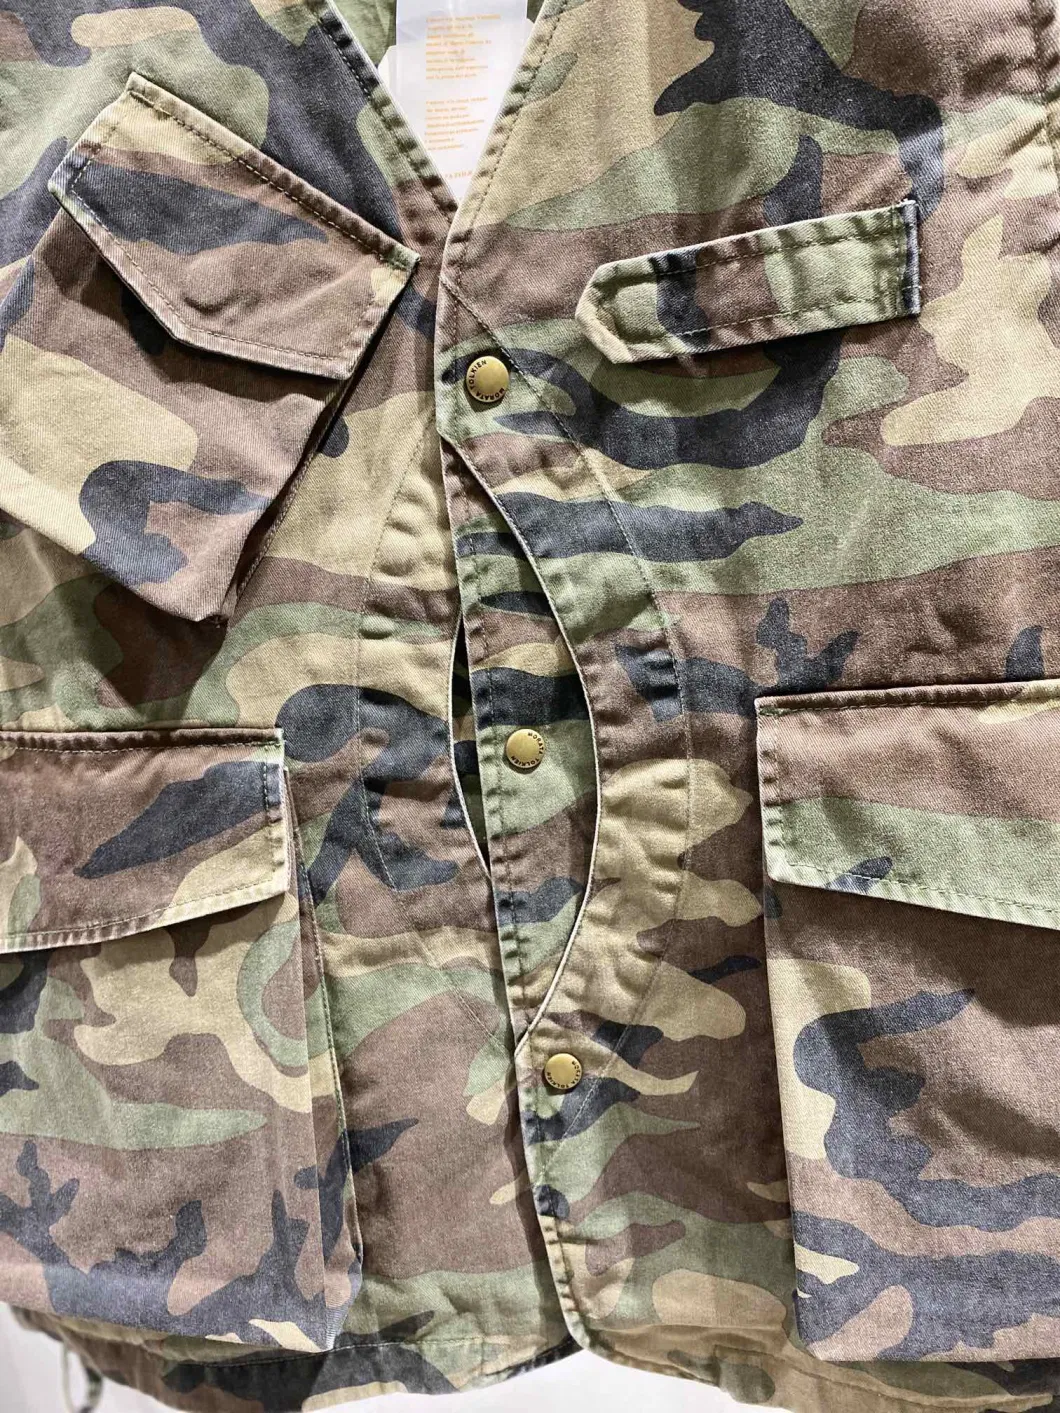 Hot Sale Tactical Men Uniform Camouflage Printing Vest Heated Hunting Gilet